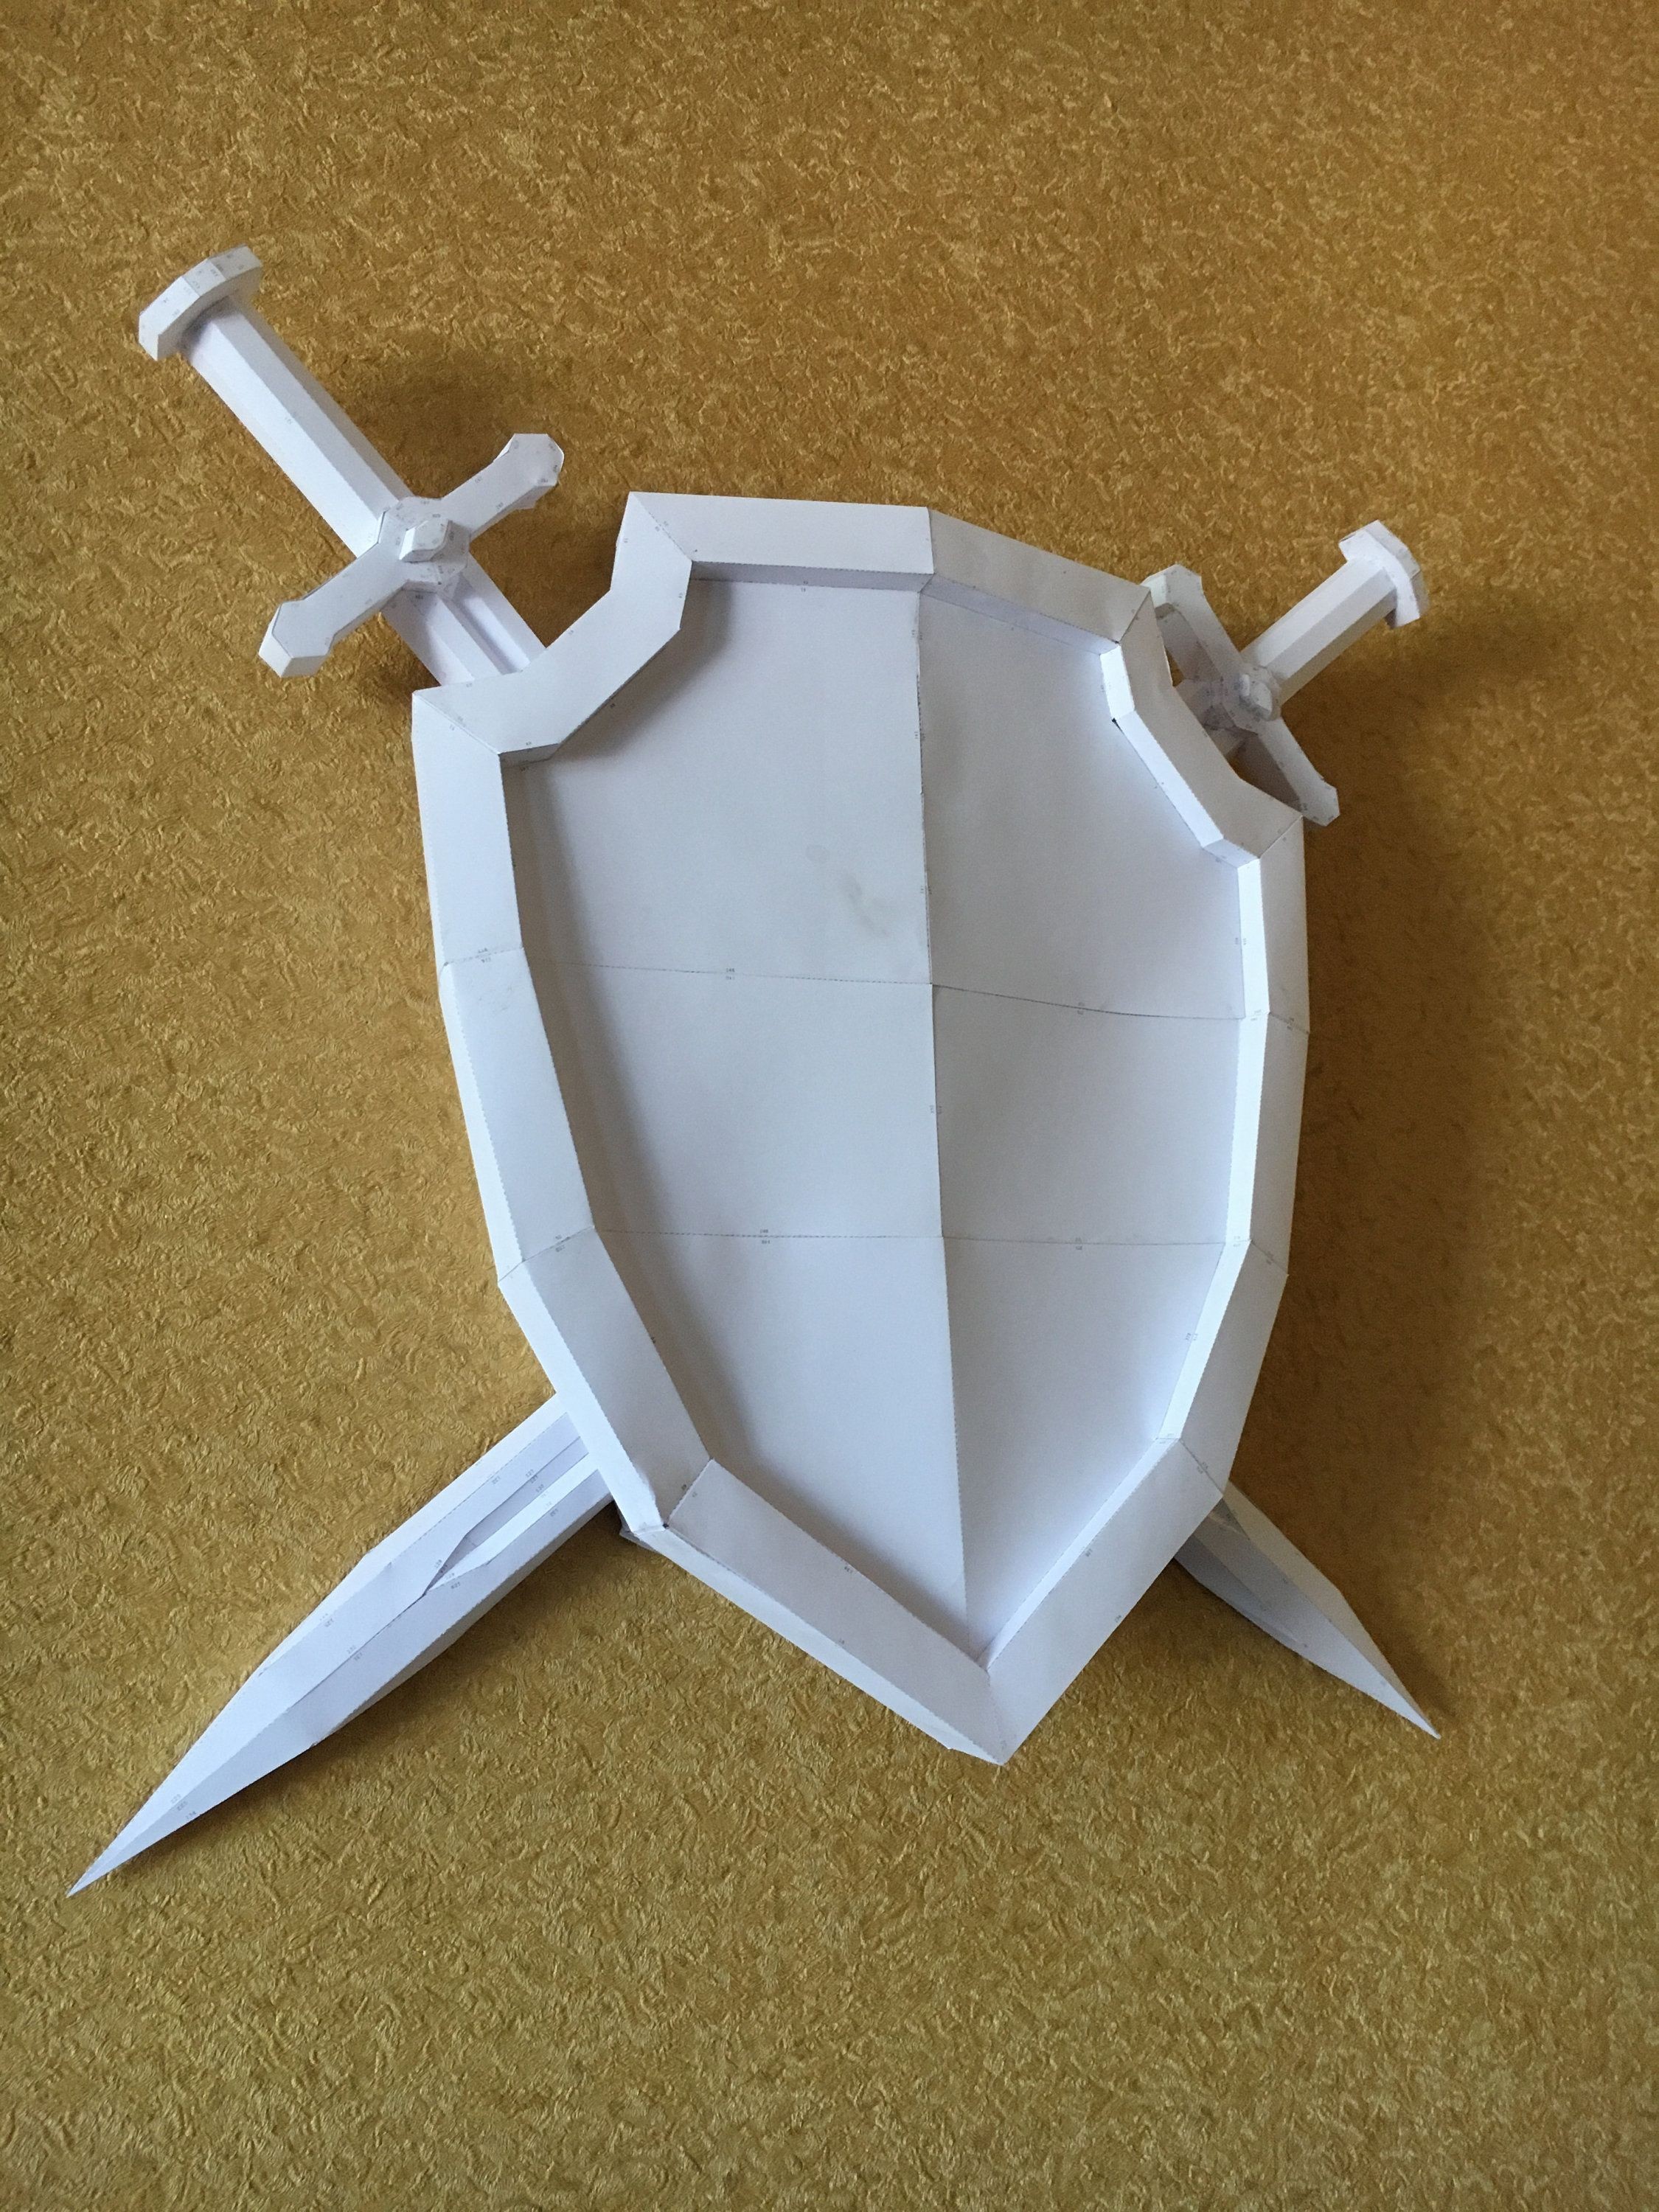 Papercraft Horse Sword Shield Diy Papercraft Model ÐÑÐ¼Ð°Ð¶Ð½ÑÐµ Ð¸Ð·Ð´ÐµÐ Ð¸Ñ